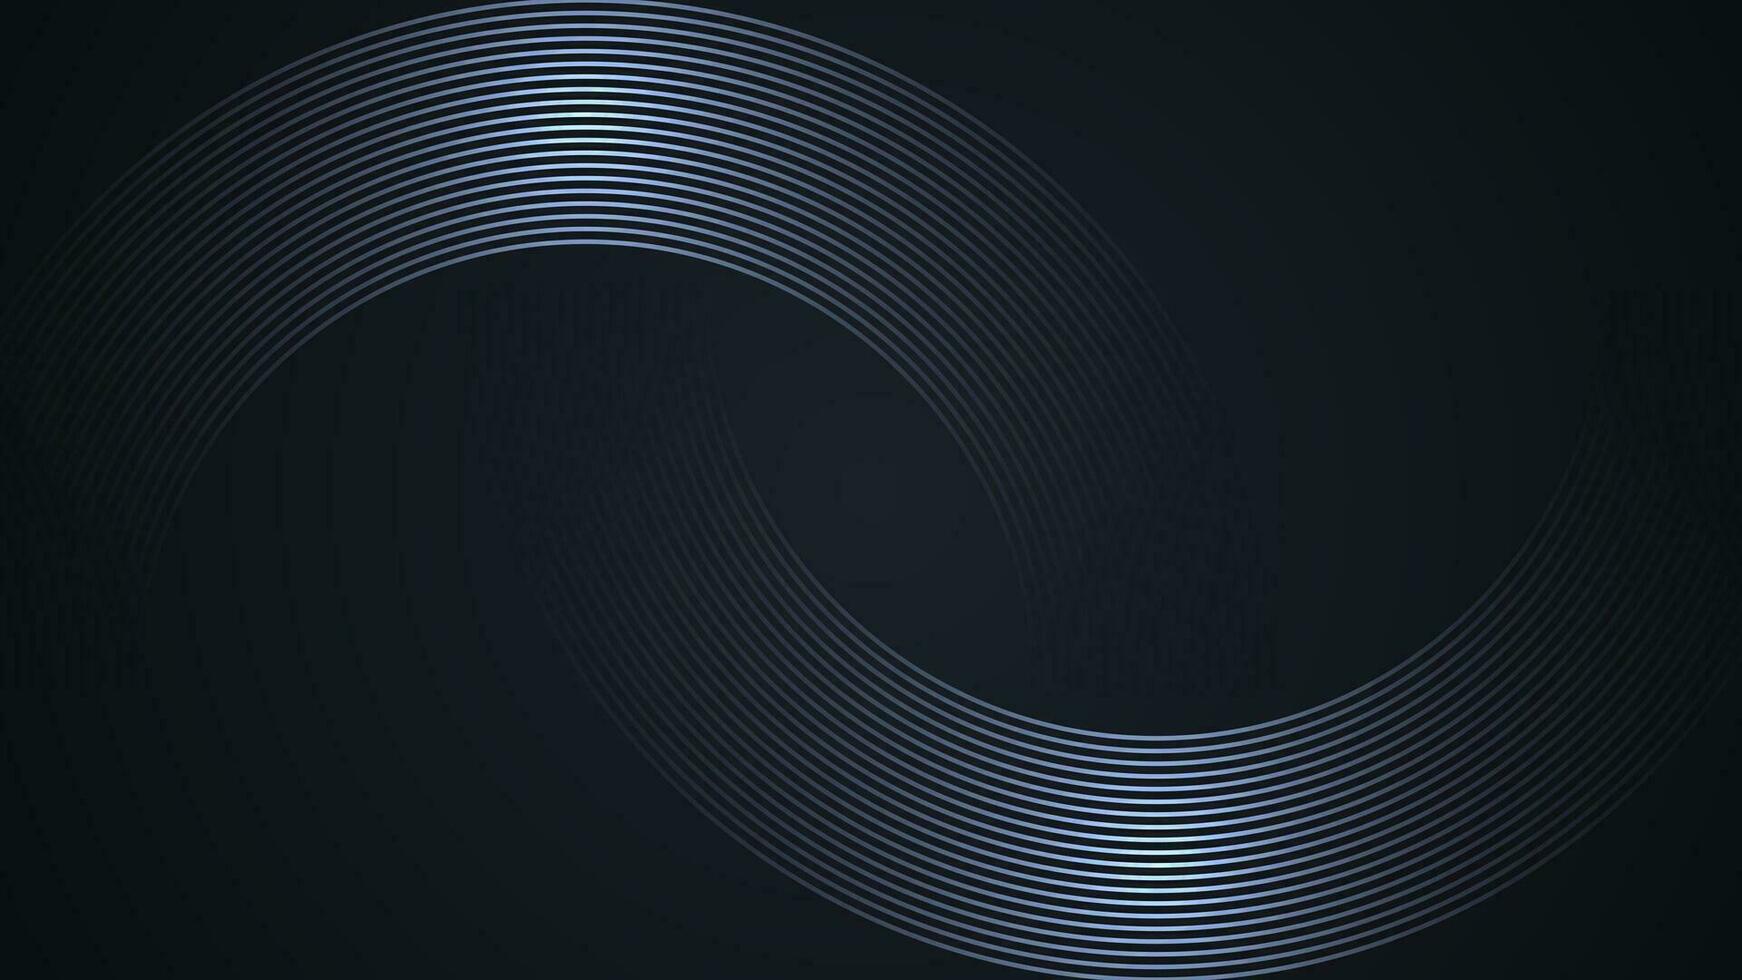 svart enkel abstrakt bakgrund med rader i en böjd stil geometrisk stil som de huvud element. vektor